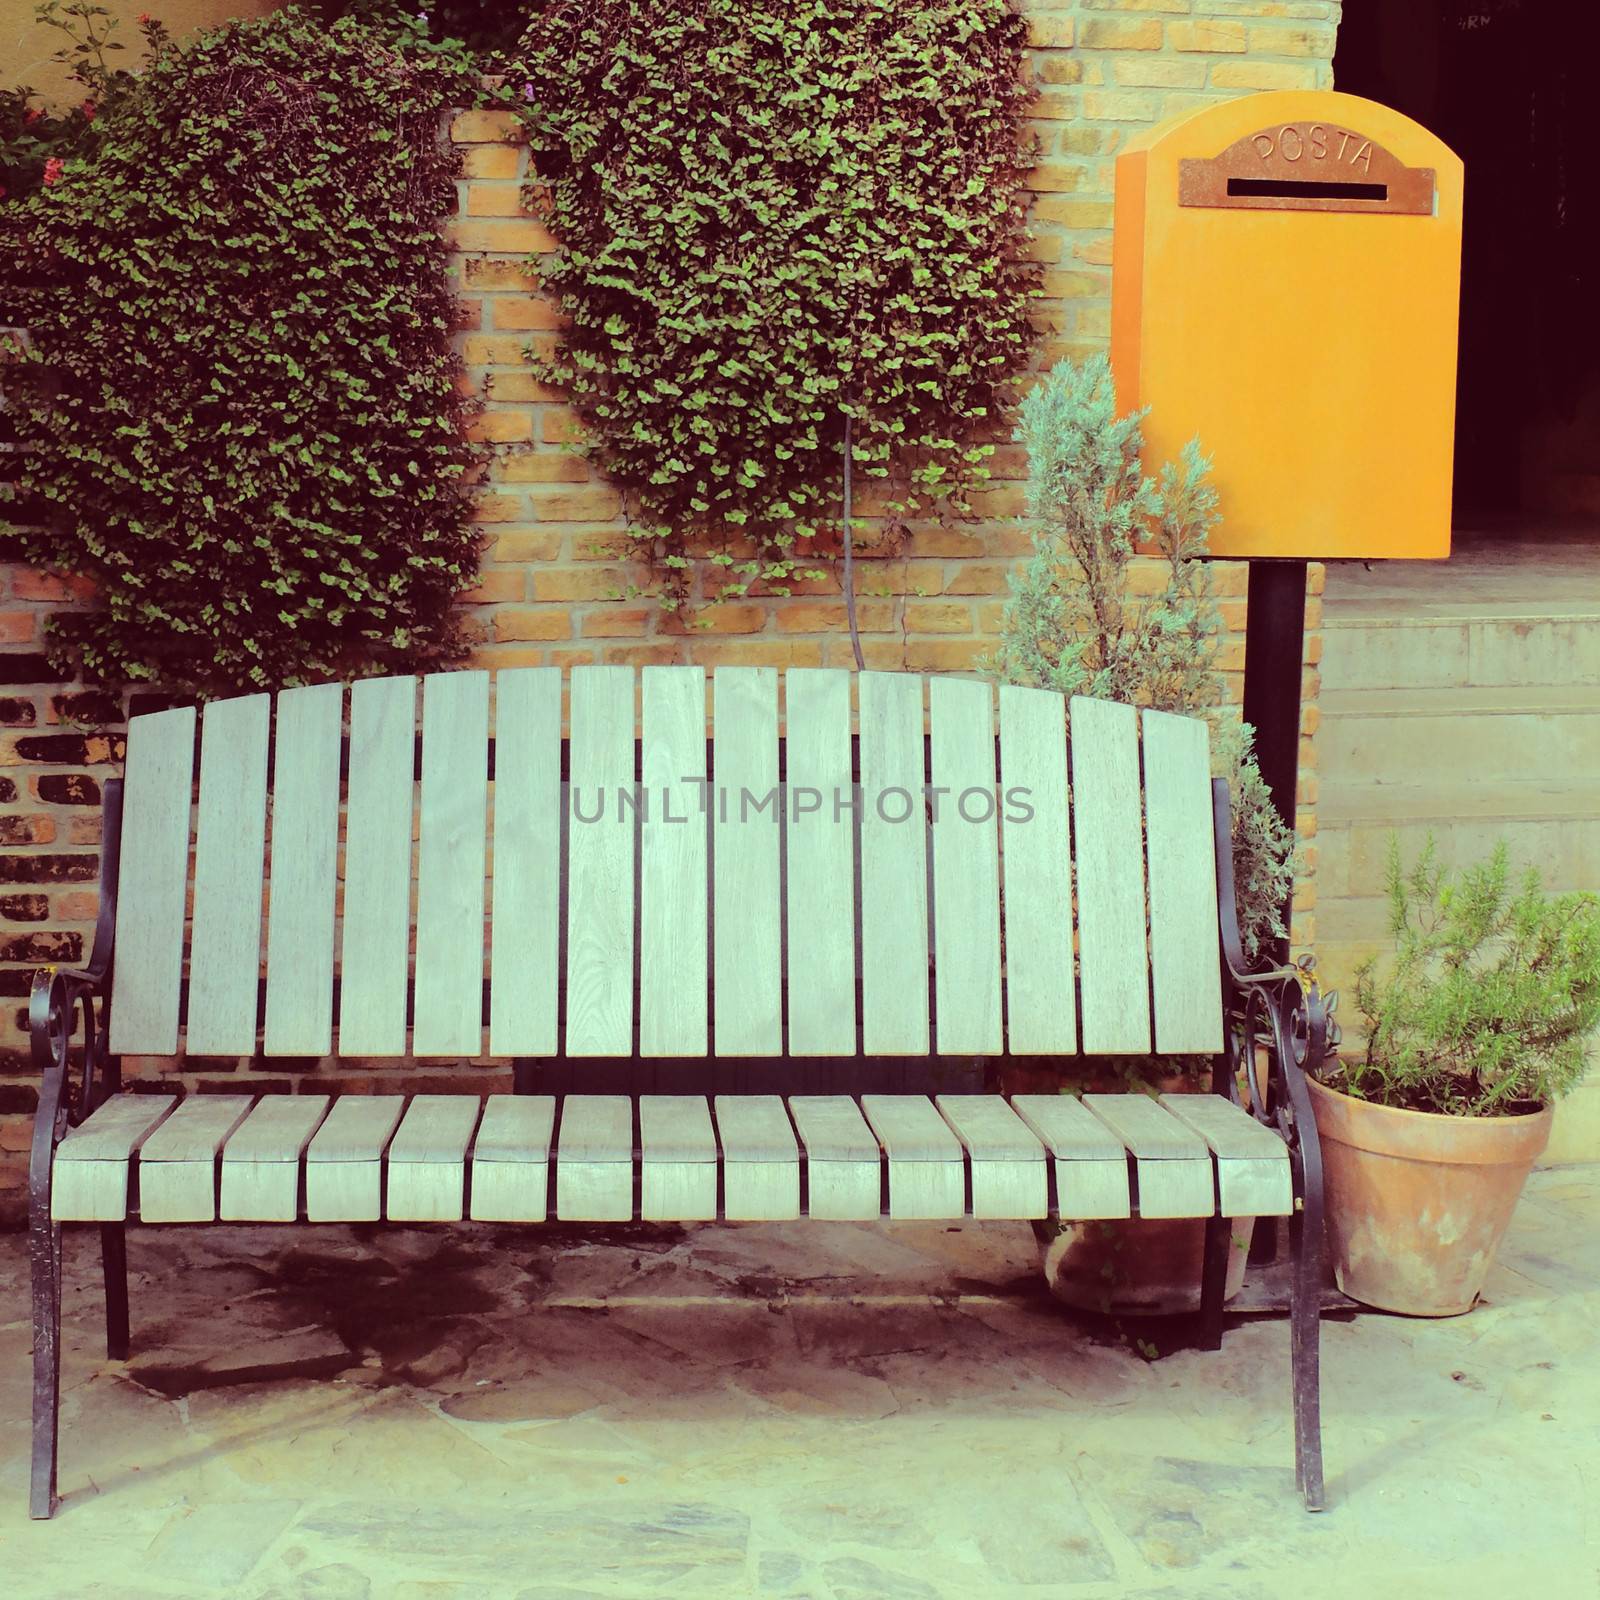 Wooden chair with vintage mailbox in garden, retro filter effect